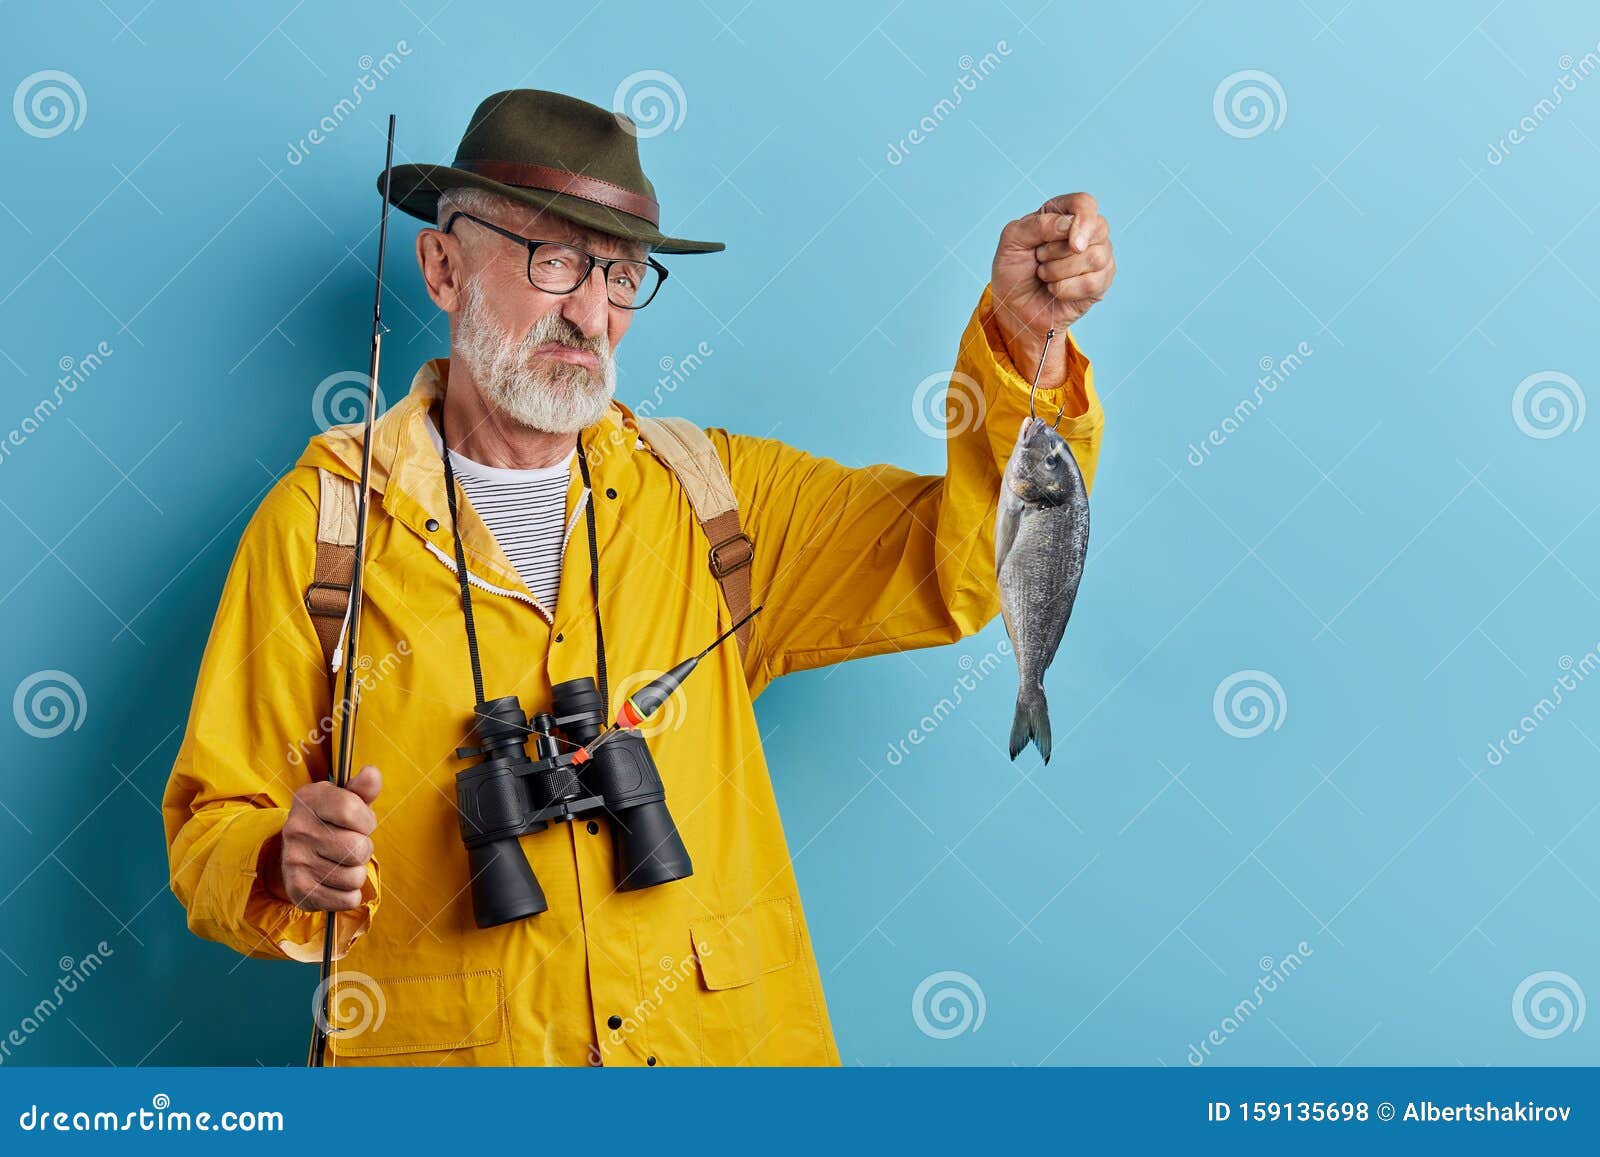 Sad Man Holding Fish Stock Photos - Free & Royalty-Free Stock Photos from  Dreamstime